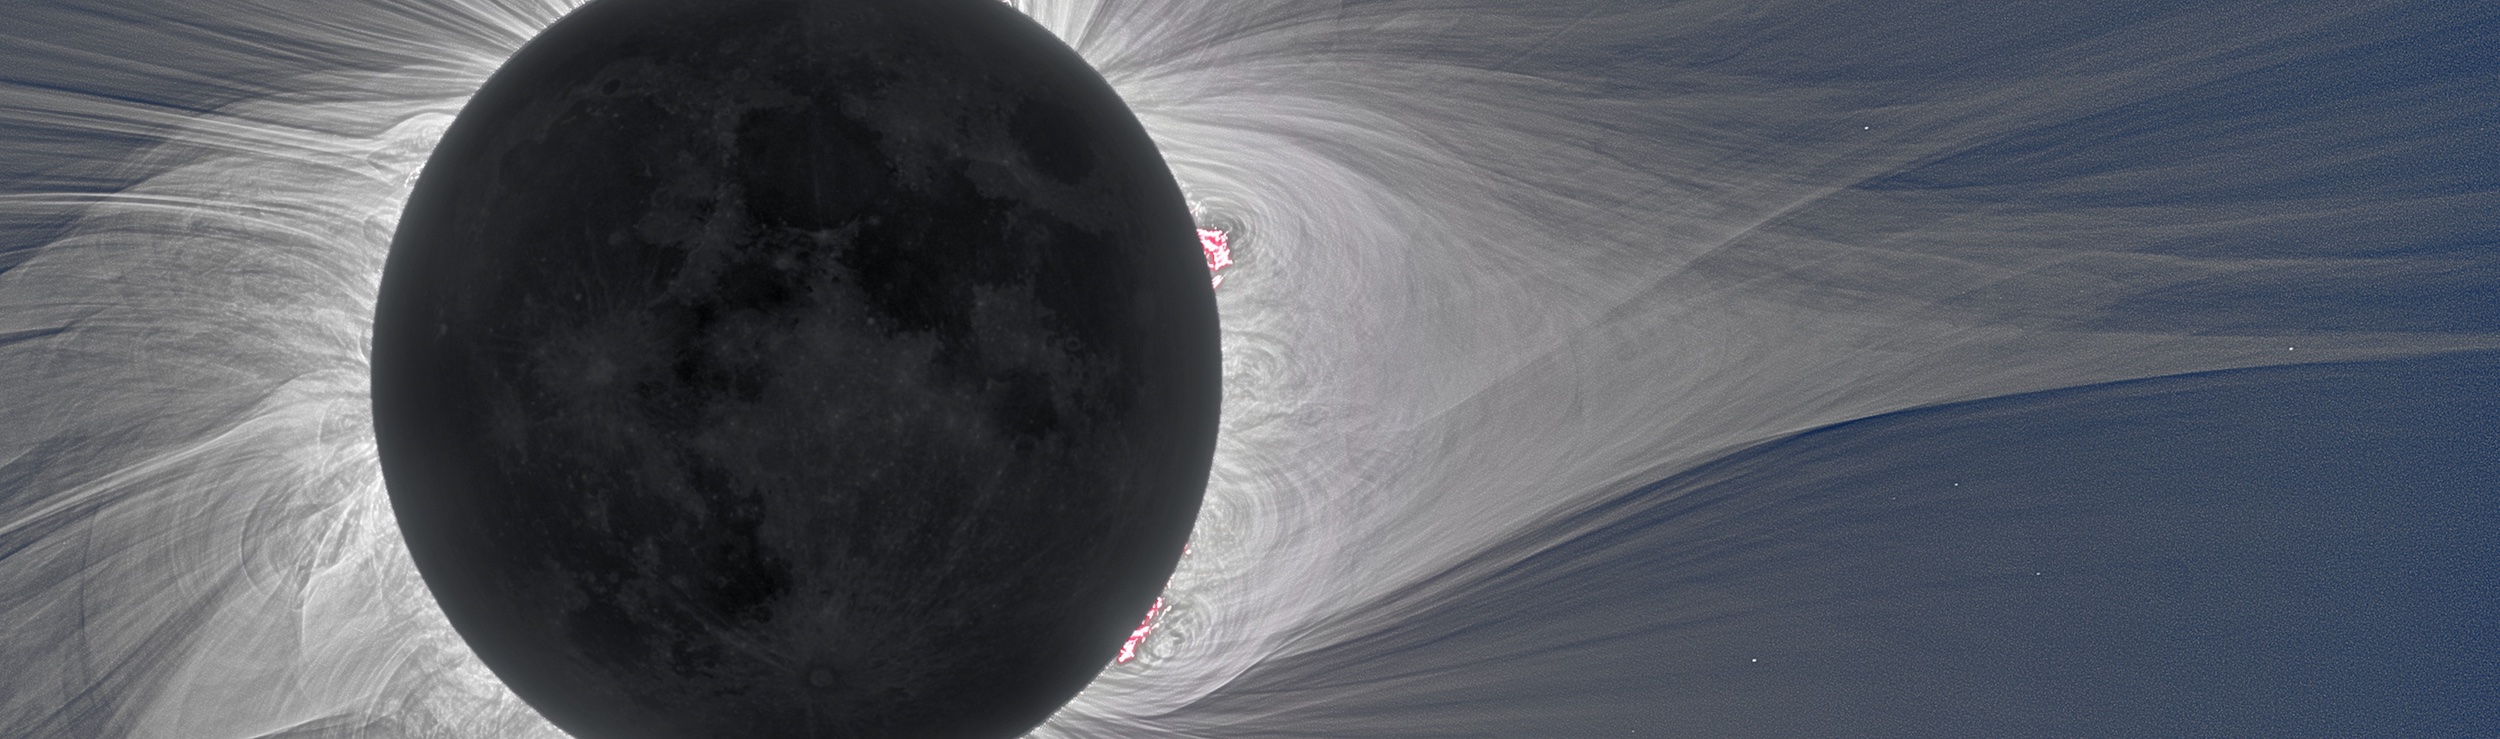 Solar eclipse showing the solar corona